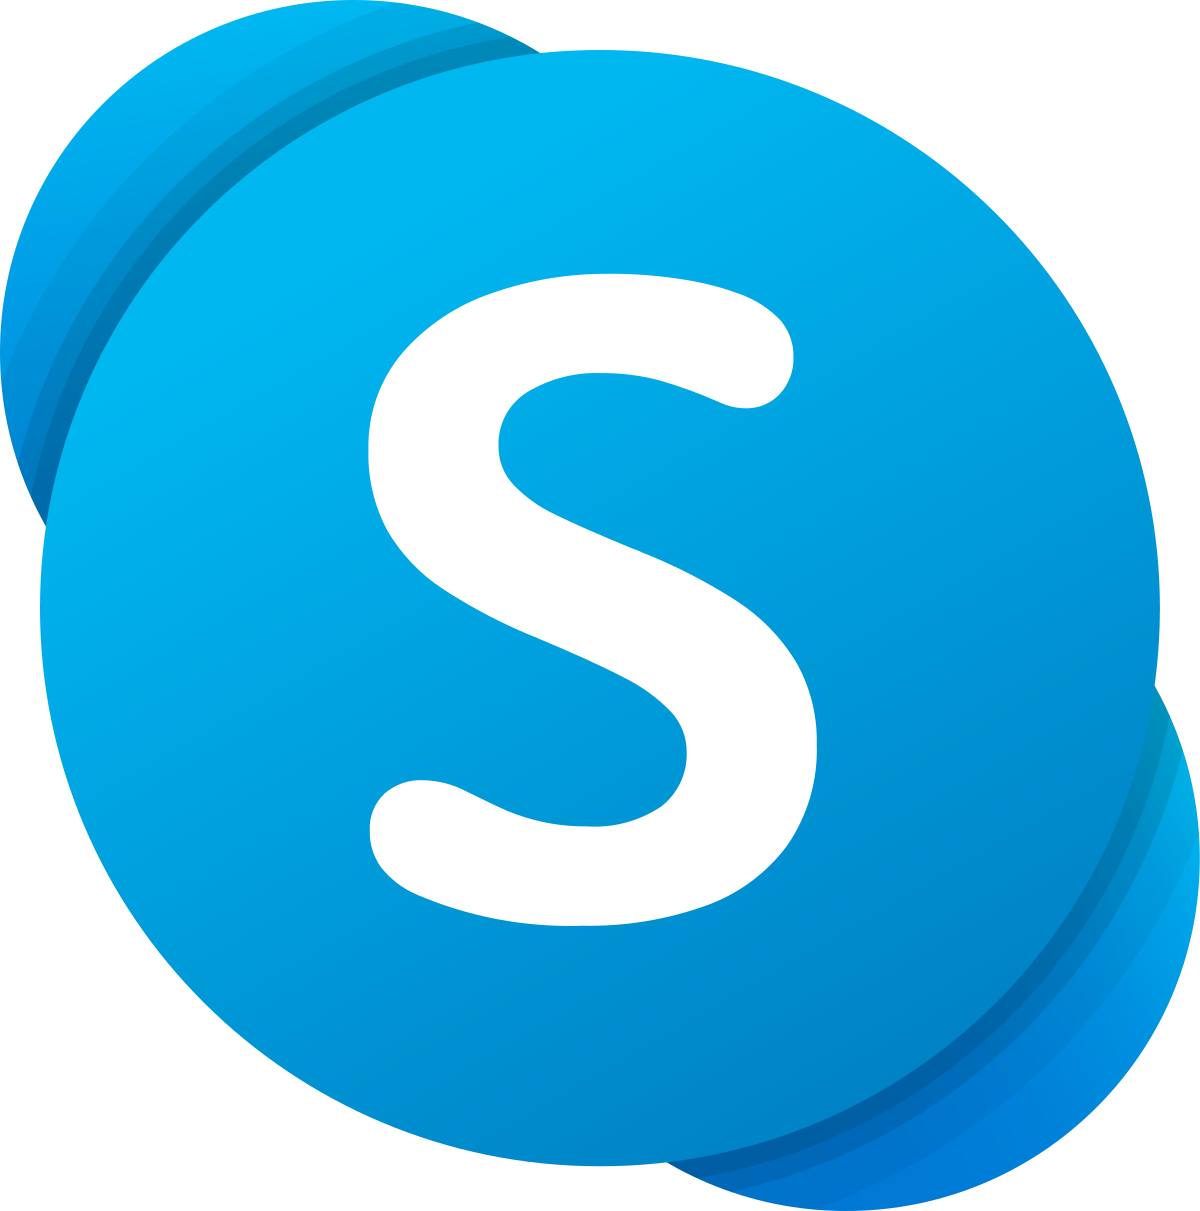 Skype and Windows logo